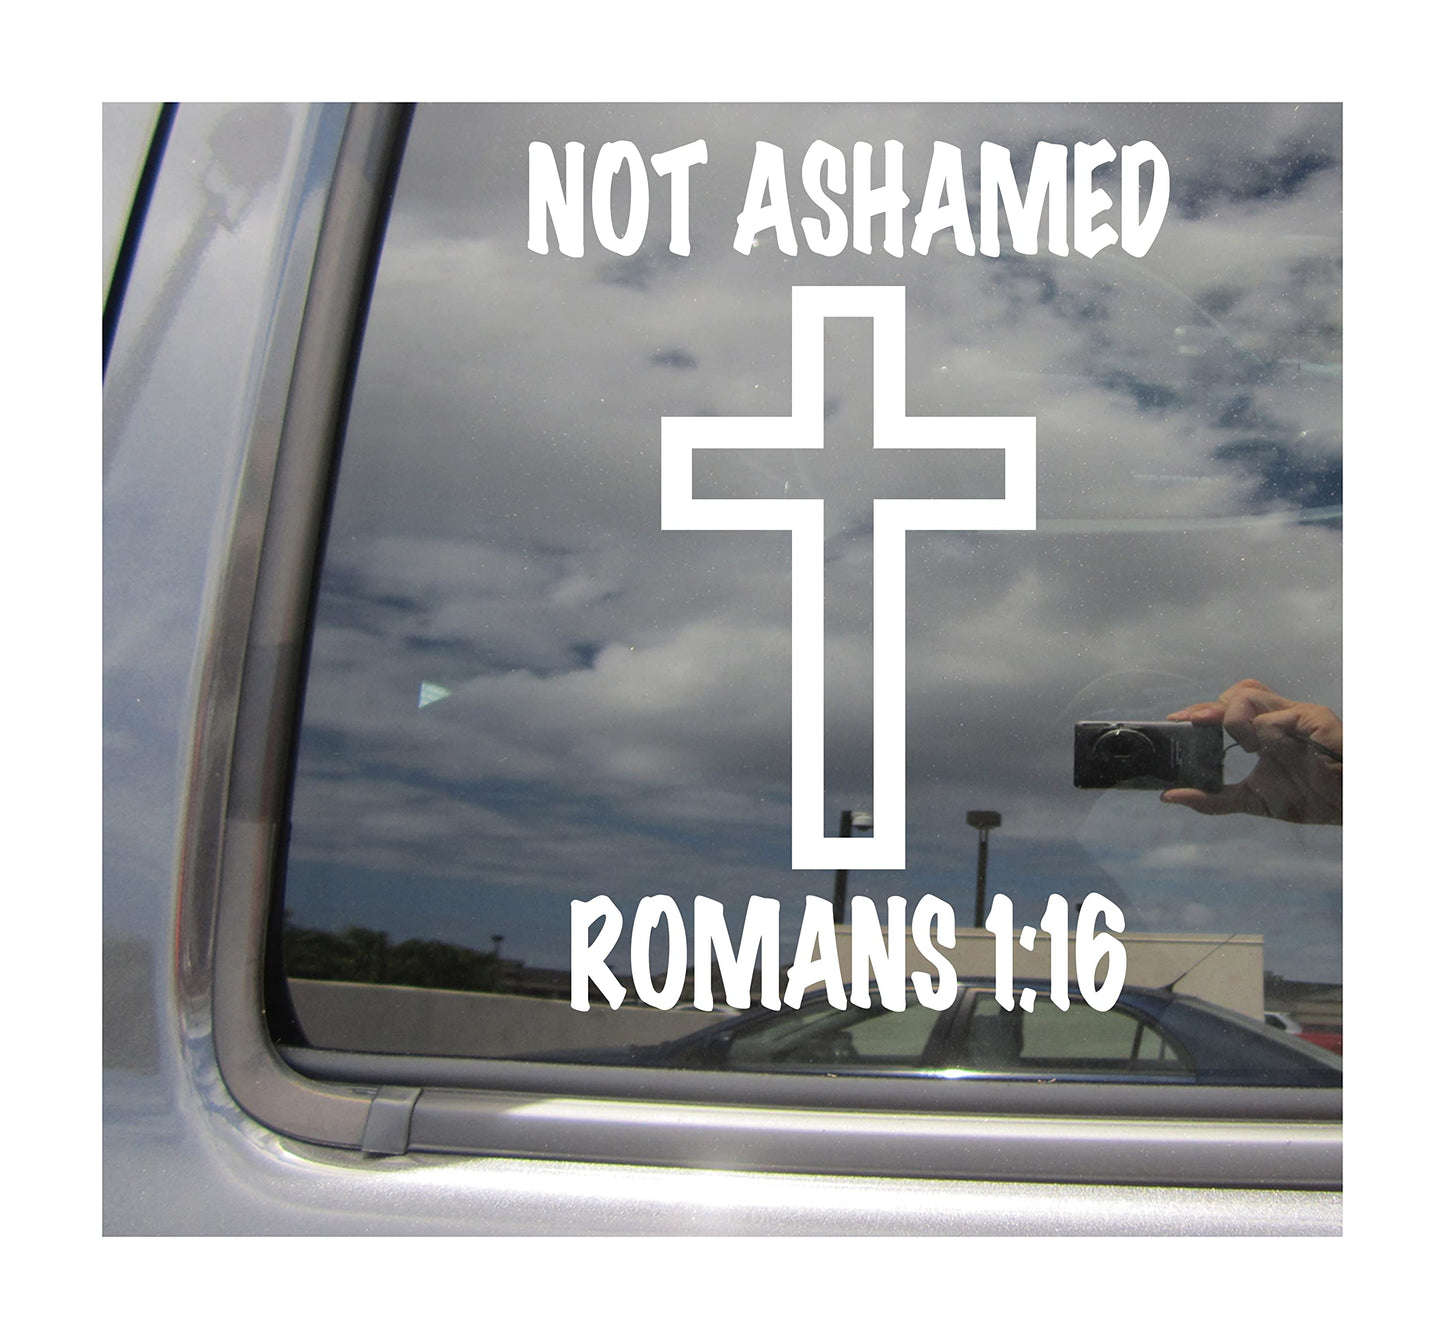 Romans 1:16 Not Ashamed - Bible Verse Jesus Christian Christ Car Truck Van Moped Helmet Hard Hat Auto Automotive Craft Cup Tumbler Laptop Vinyl Decal Bumper Window Wall Sticker 08146